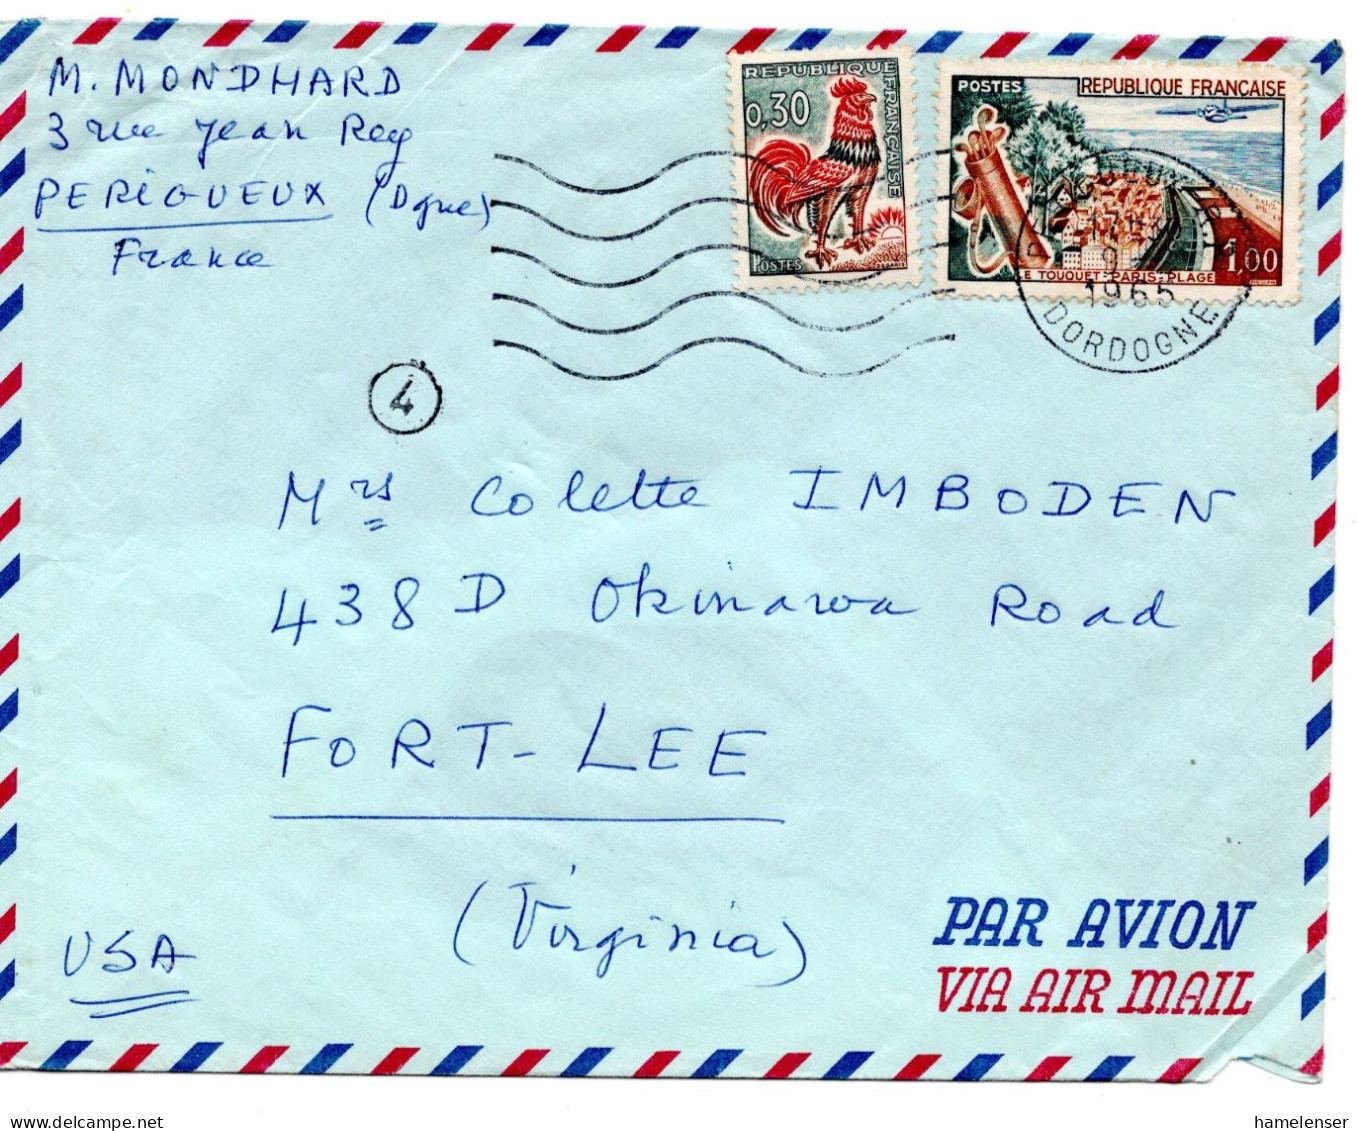 65983 - Frankreich - 1965 - 1,00F Le Touquet MiF A LpBf PERIGUEUX -> Fort Lee, VA (USA) - Covers & Documents